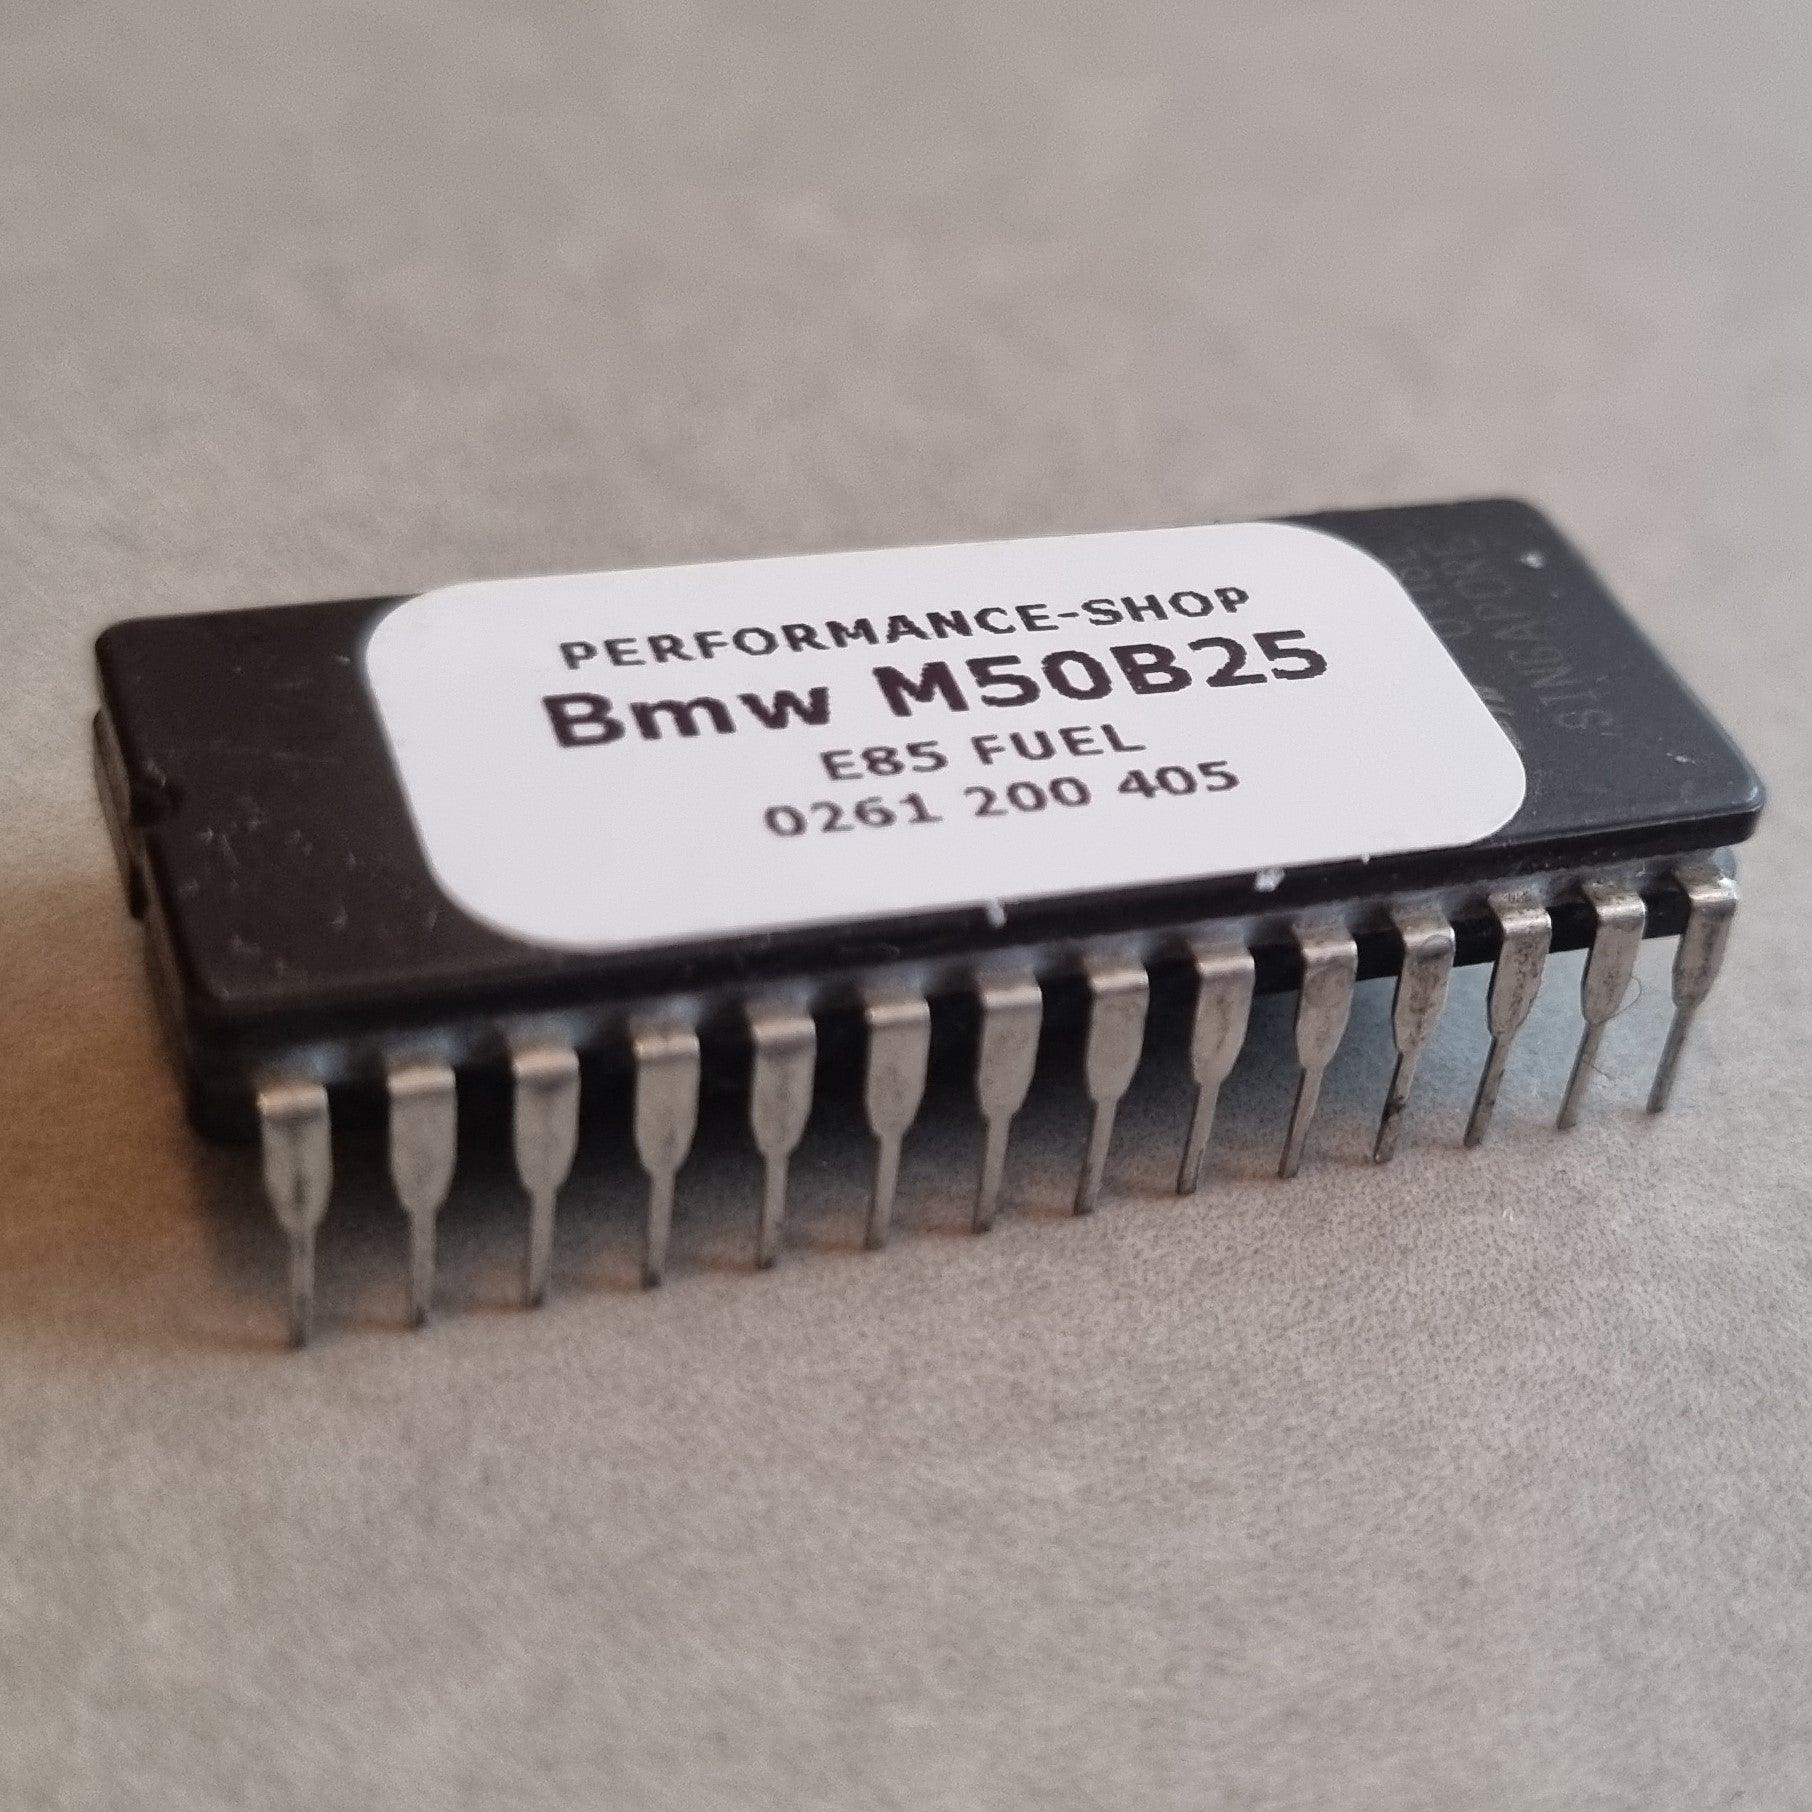 Reprogrammation E85 - BMW E36 325I / E34 525I - M50B25 (91 - 95 ...